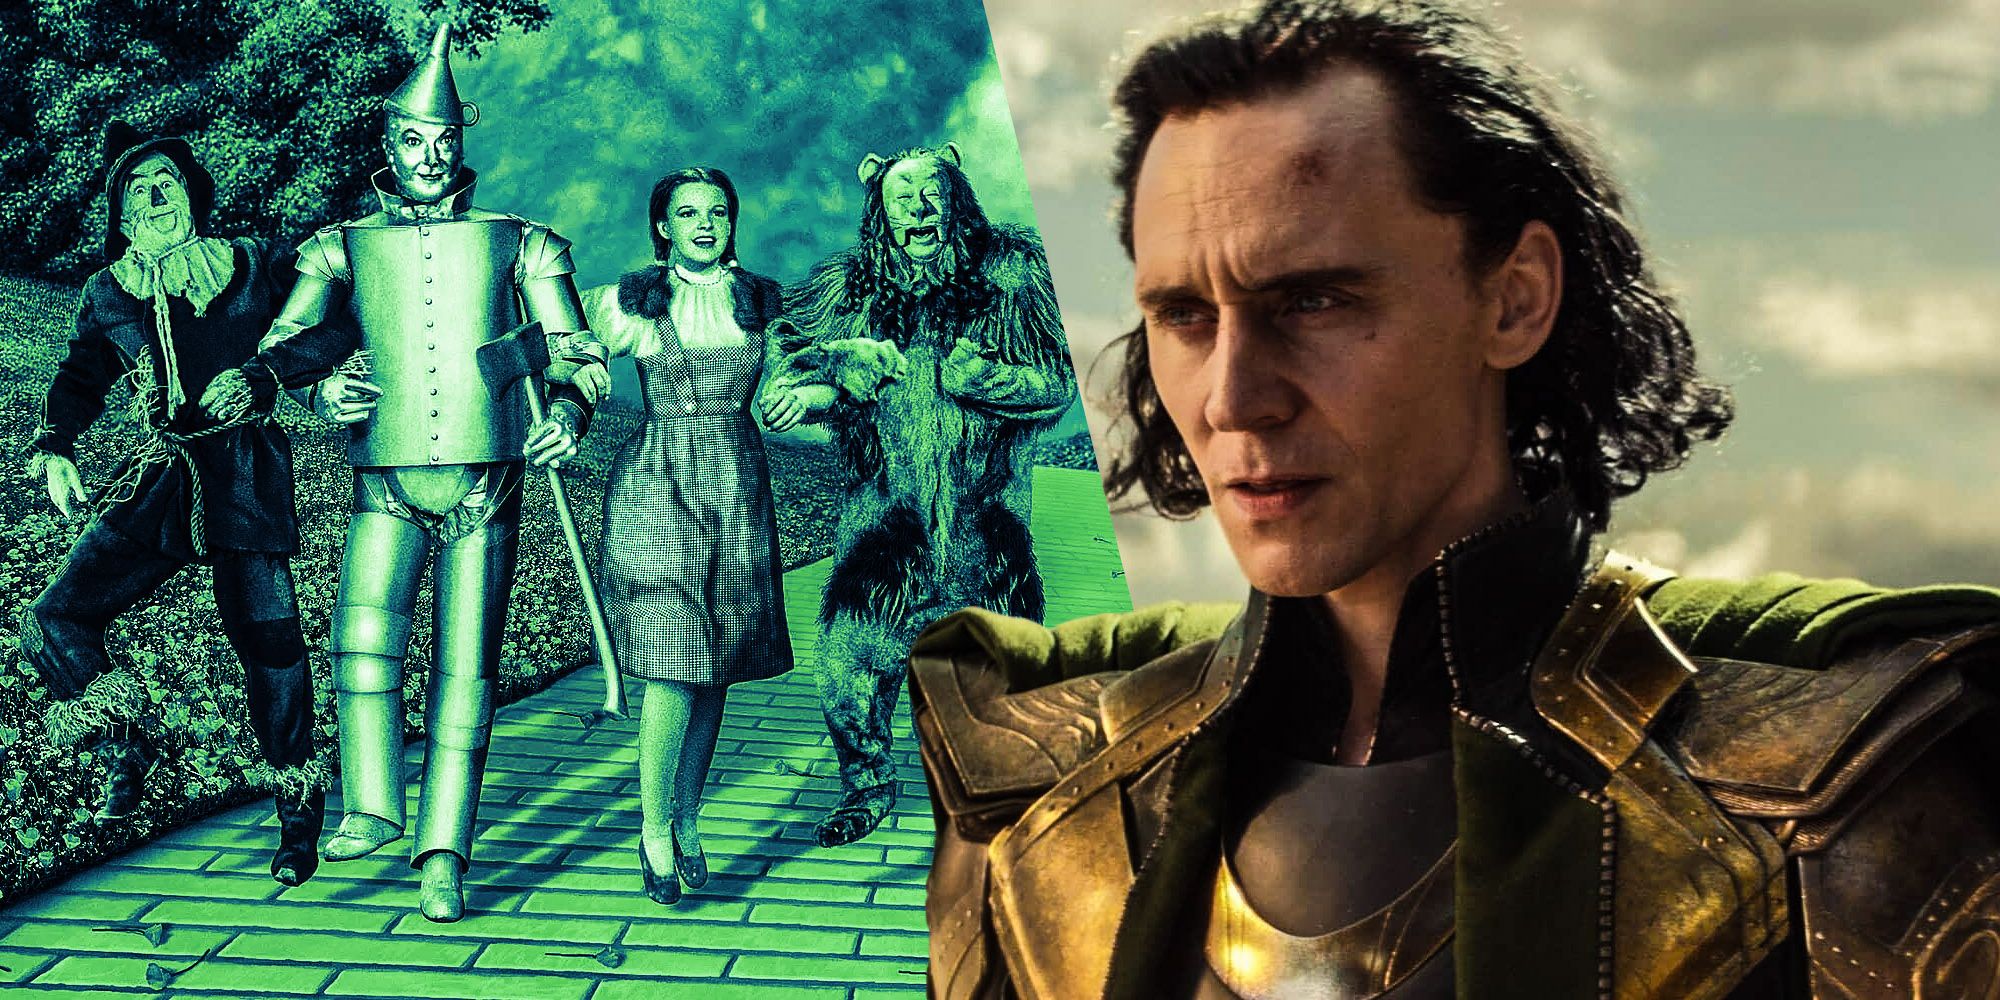 Loki wizard of Oz References